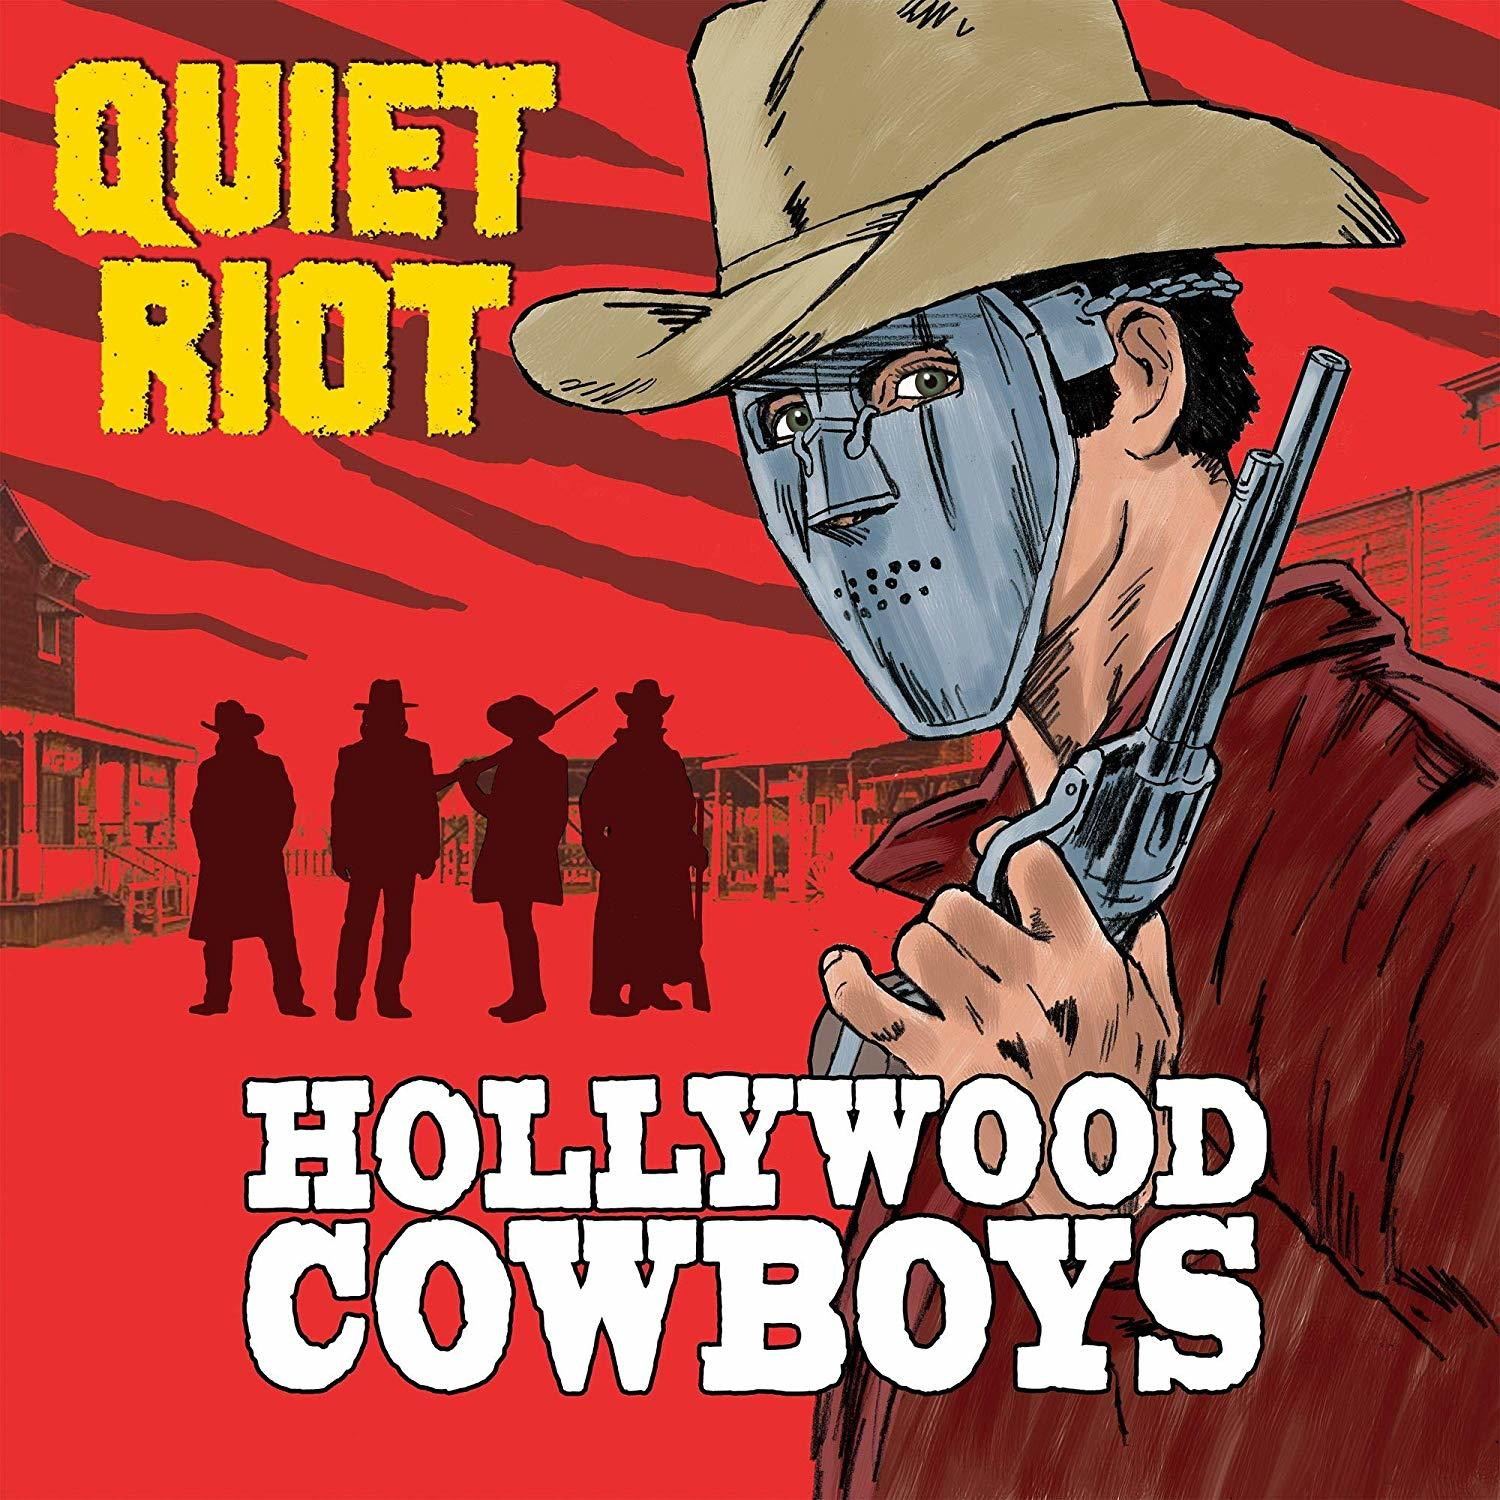 Quiet Riot (Vinyl) HOLLYWOOD - - COWBOYS